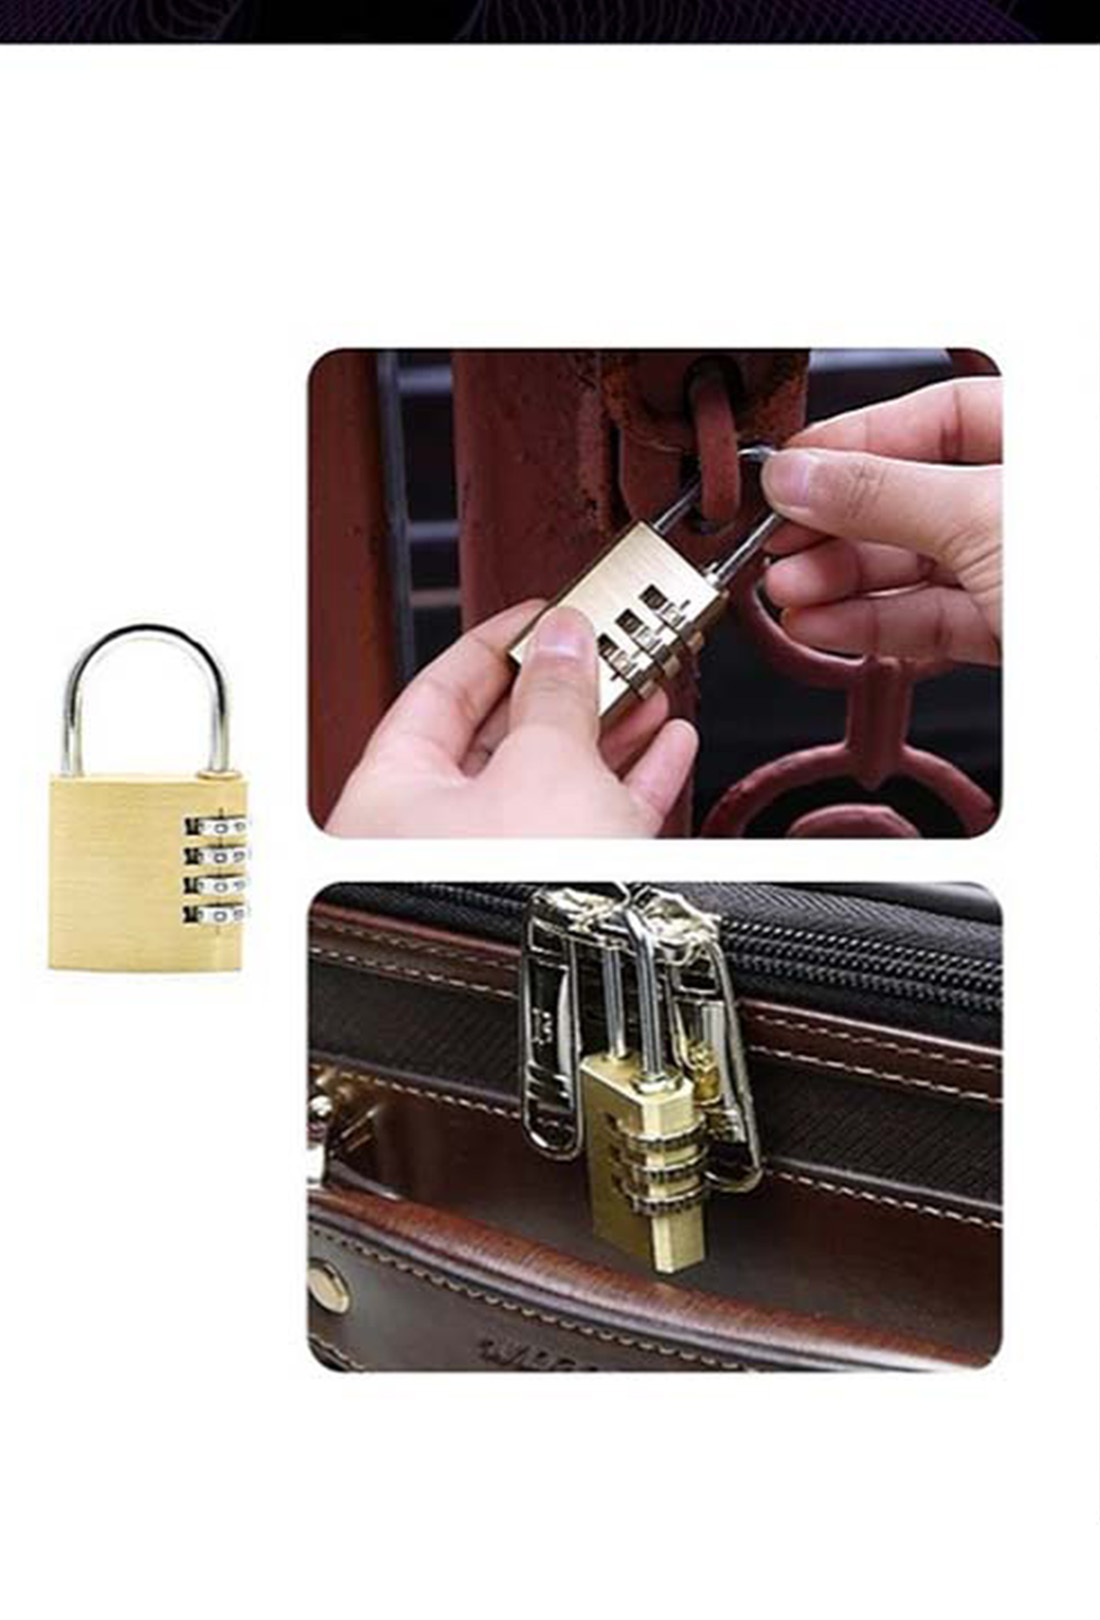 hot mini luggage locker pad locks for notebook bag cabinet